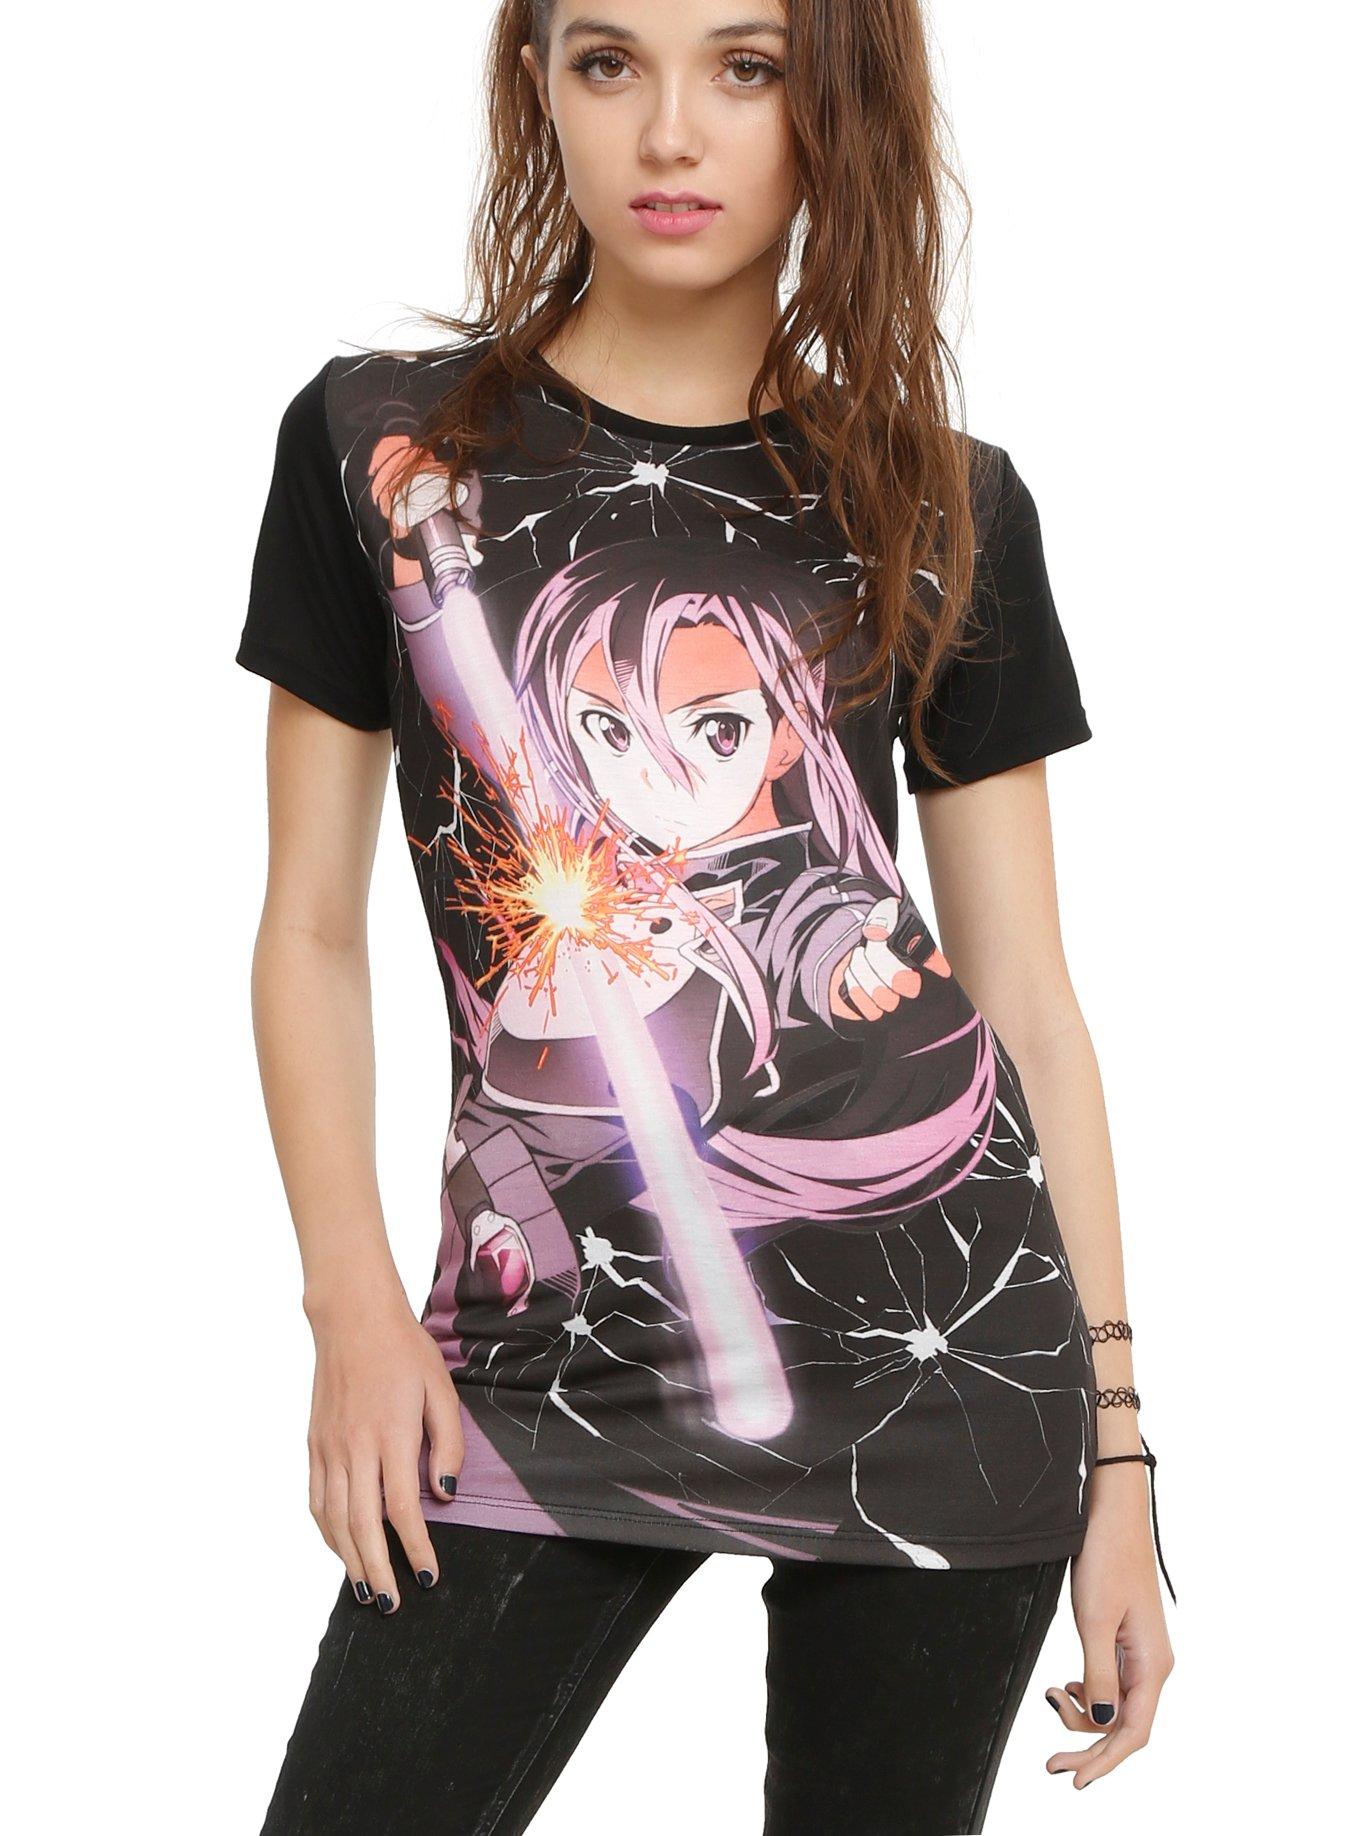 Sword Art Online Kirito Gun Fight Girls T-Shirt Hot Topic